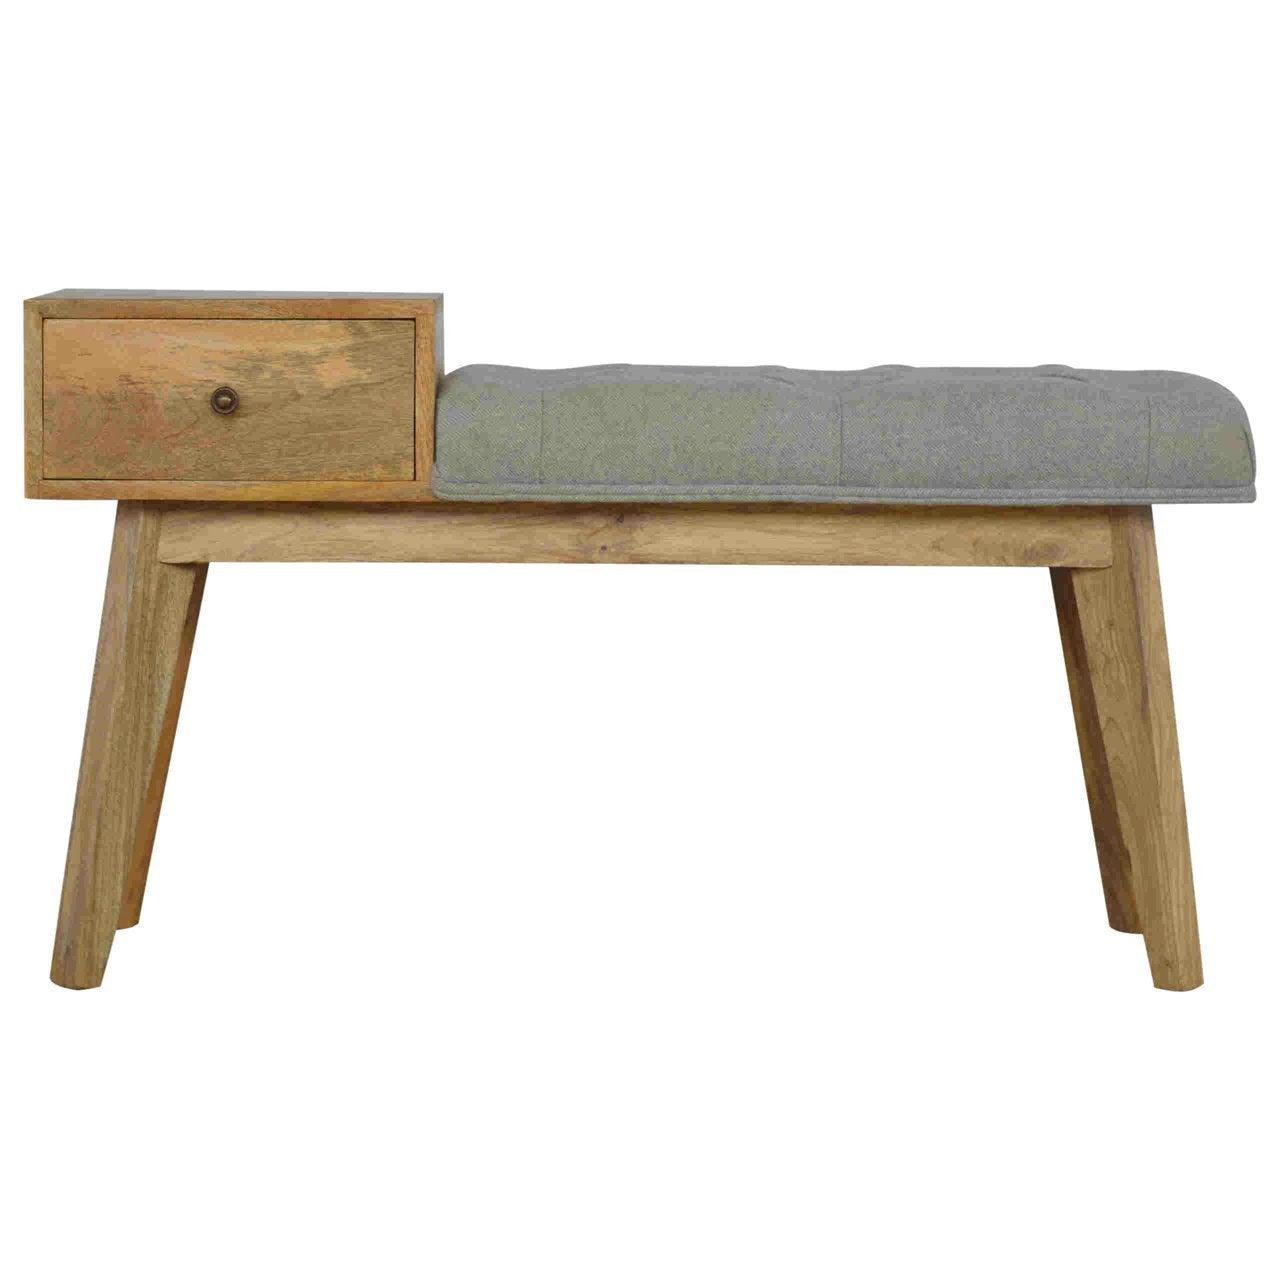 Grey tweed bench with 1 drawer - crimblefest furniture - image 1